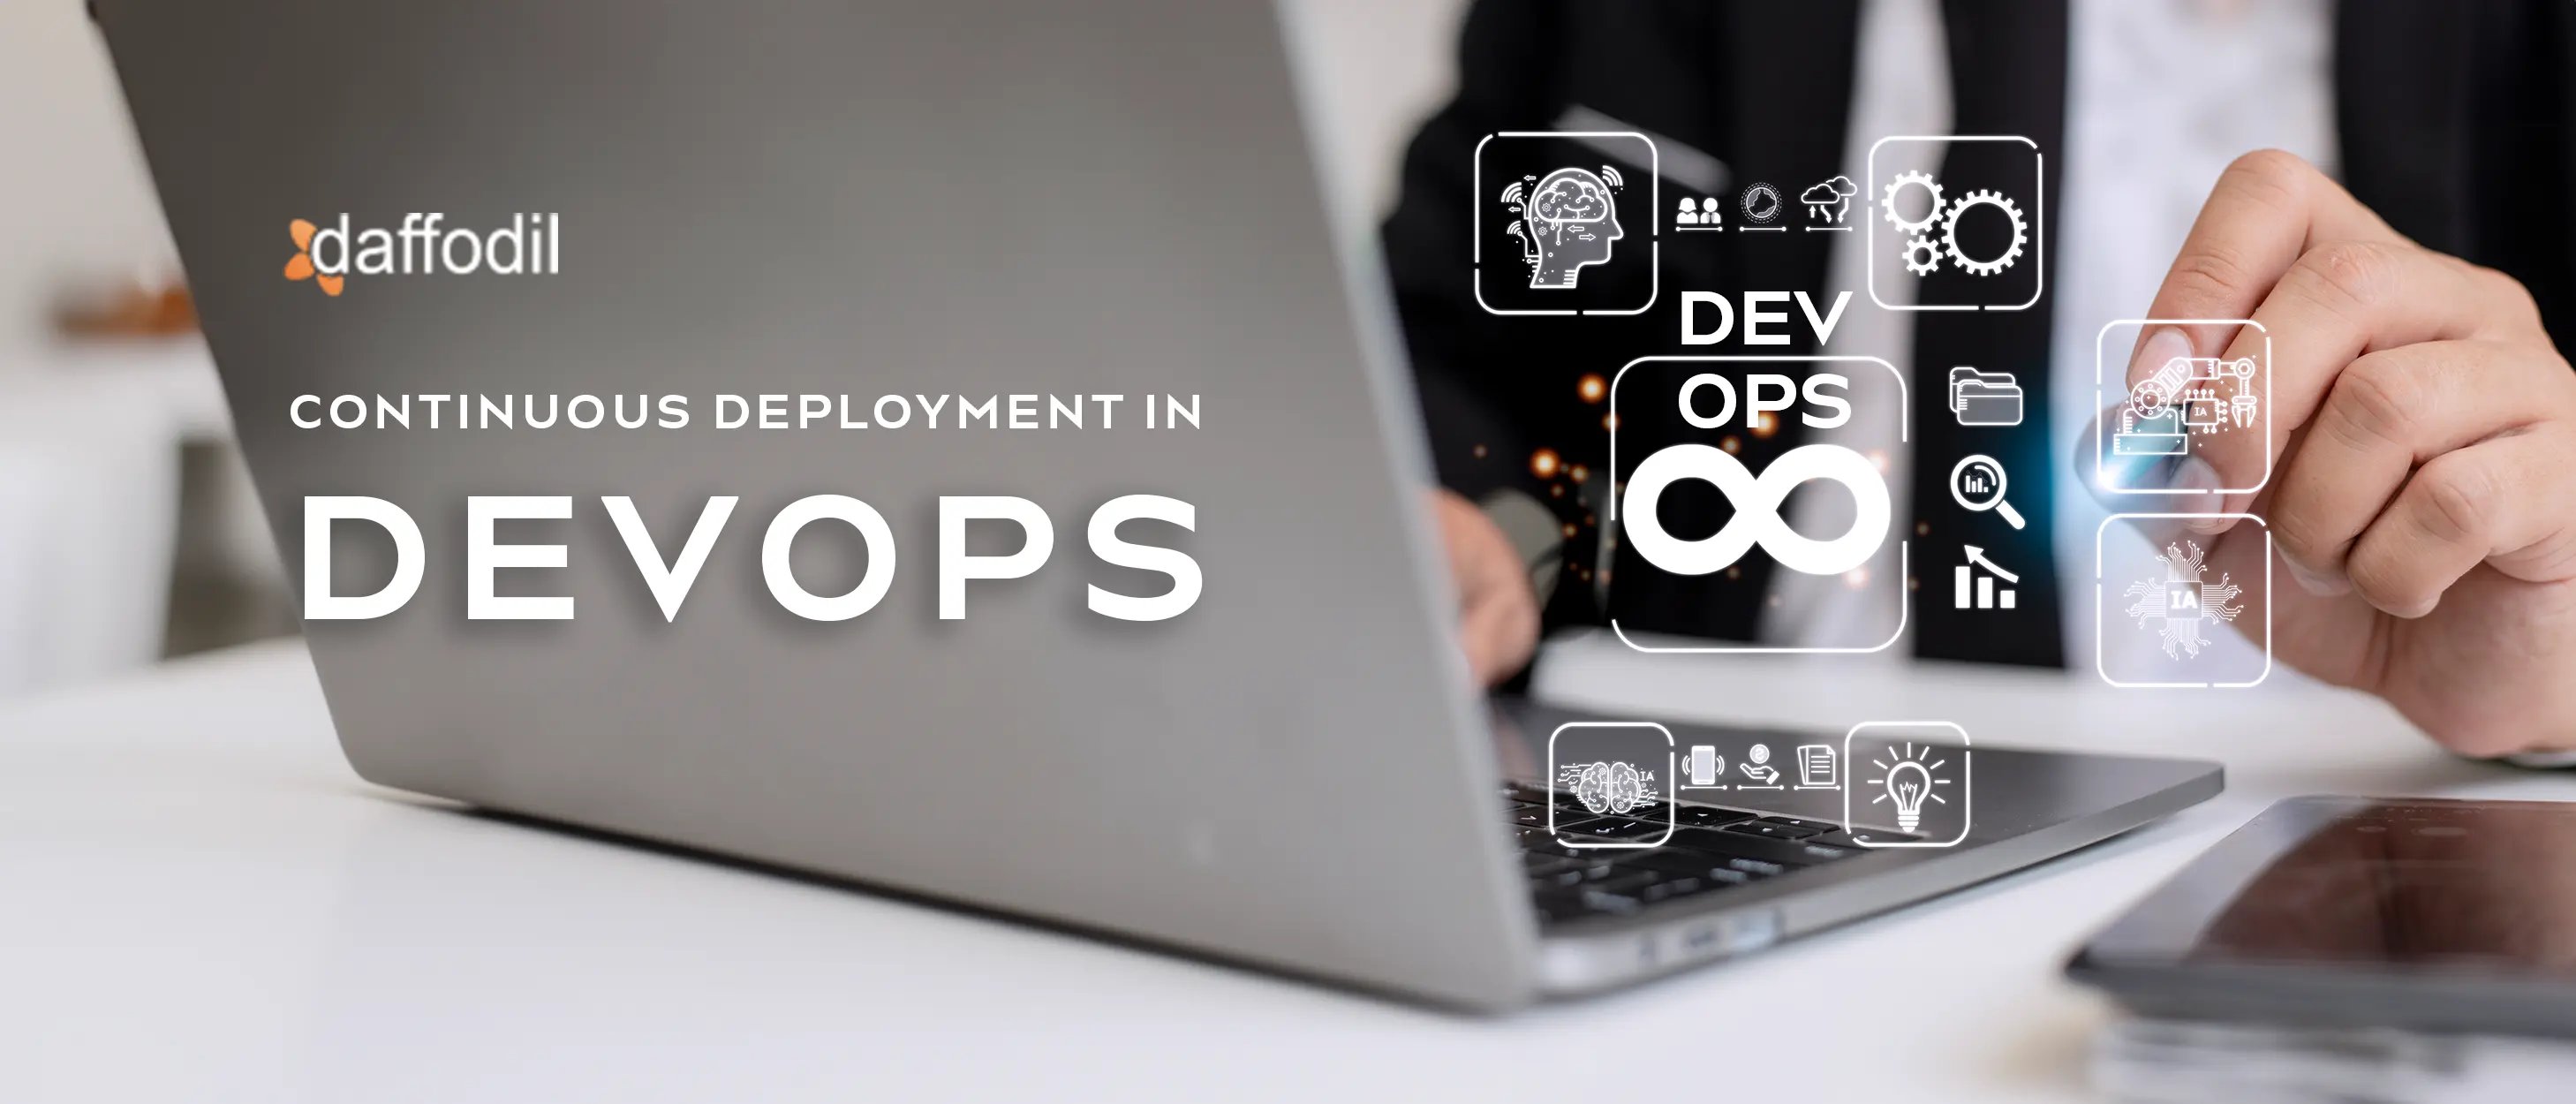 Continuous deployment in DevOps